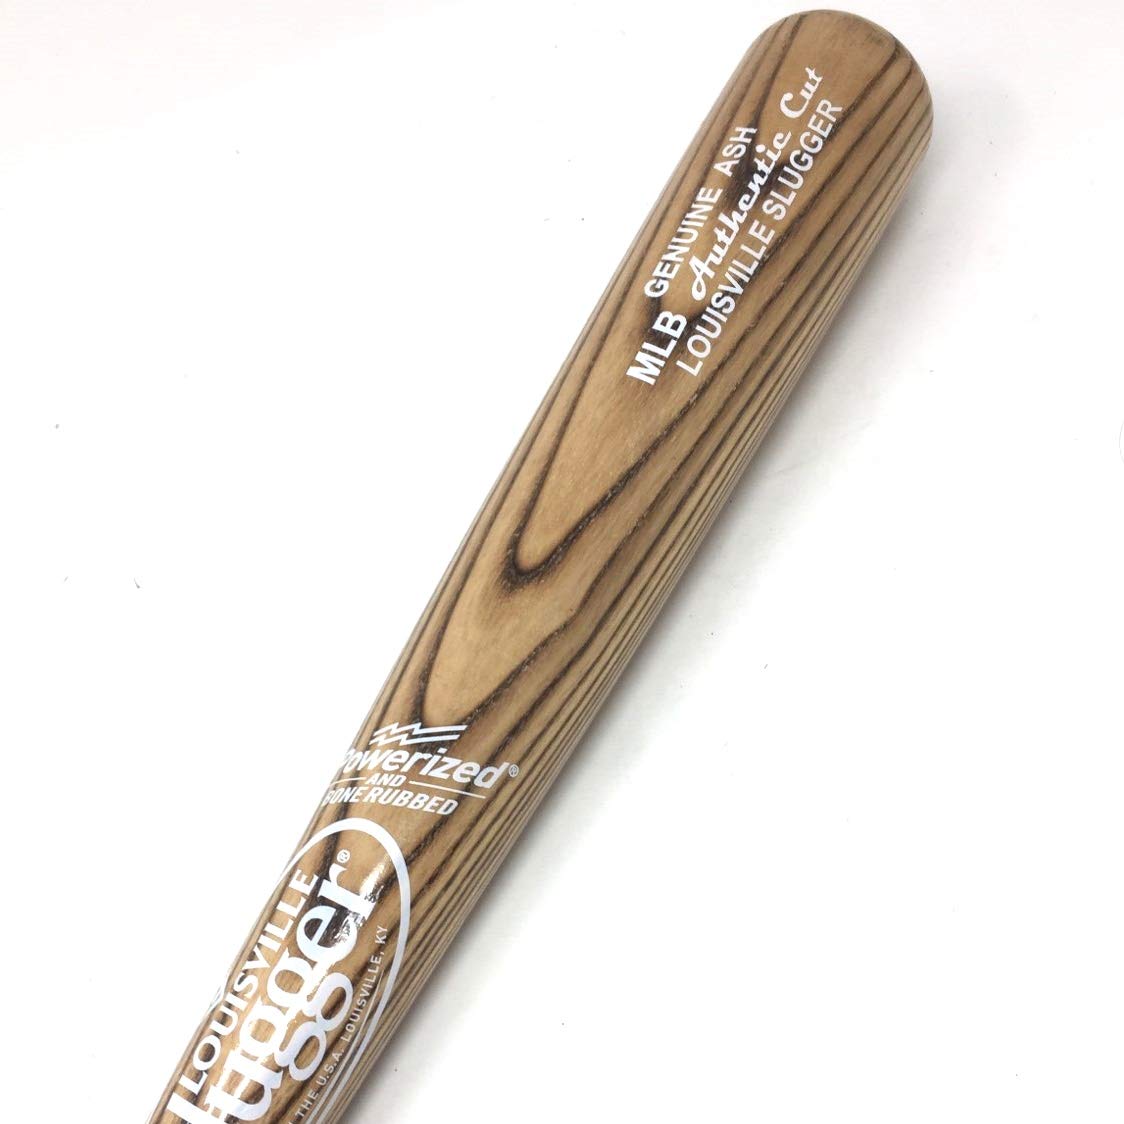 louisville-slugger-mlb-auth-ash-wood-baseball-bat-33-inch WBCAMLB-FG33BK Louisville 044277133931 The Louisville Slugger Ash Wood Bat Series is made from flexible